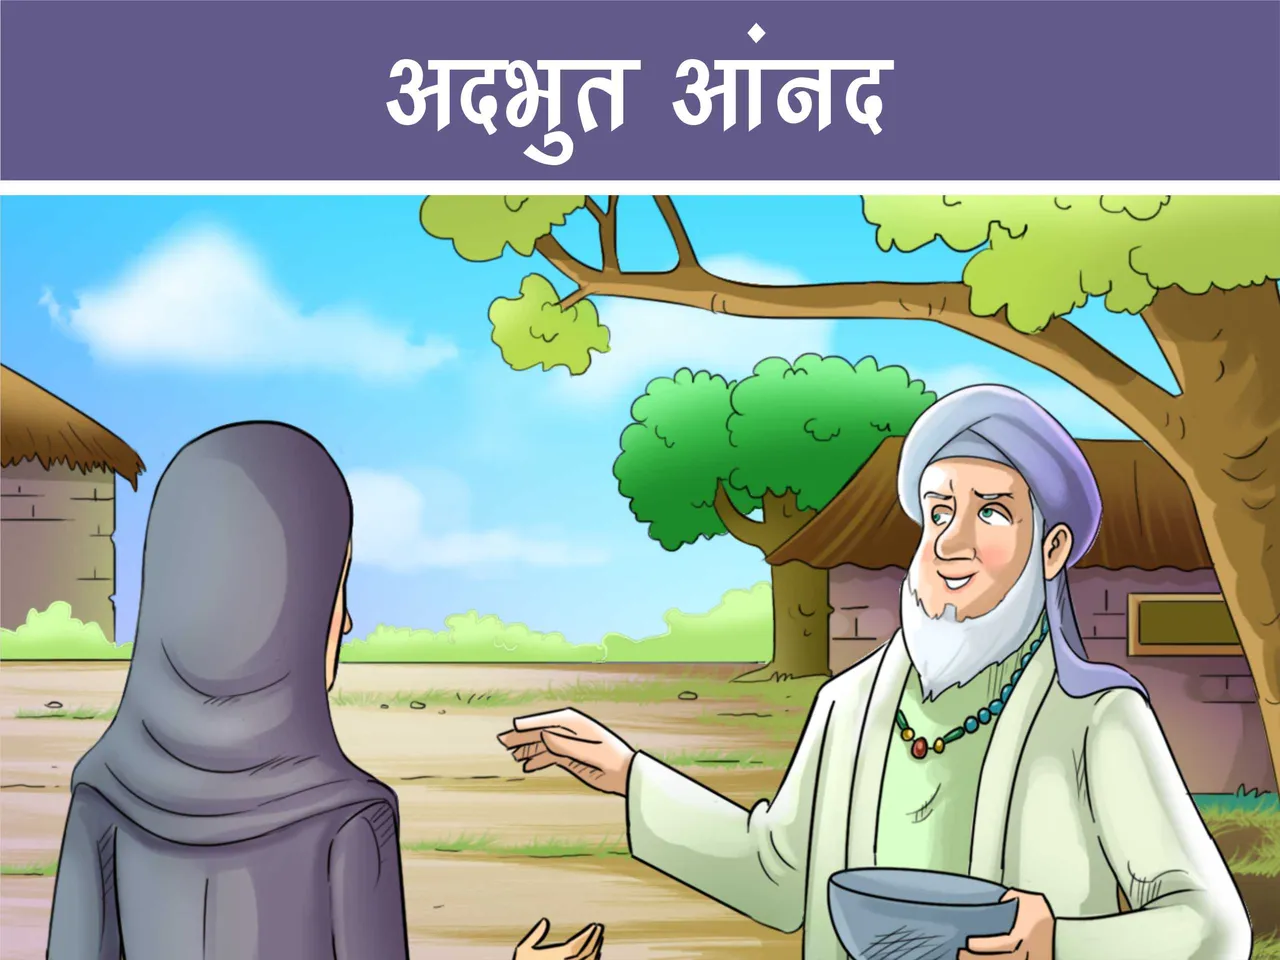 Sufi Saint and Woman Cartoon image